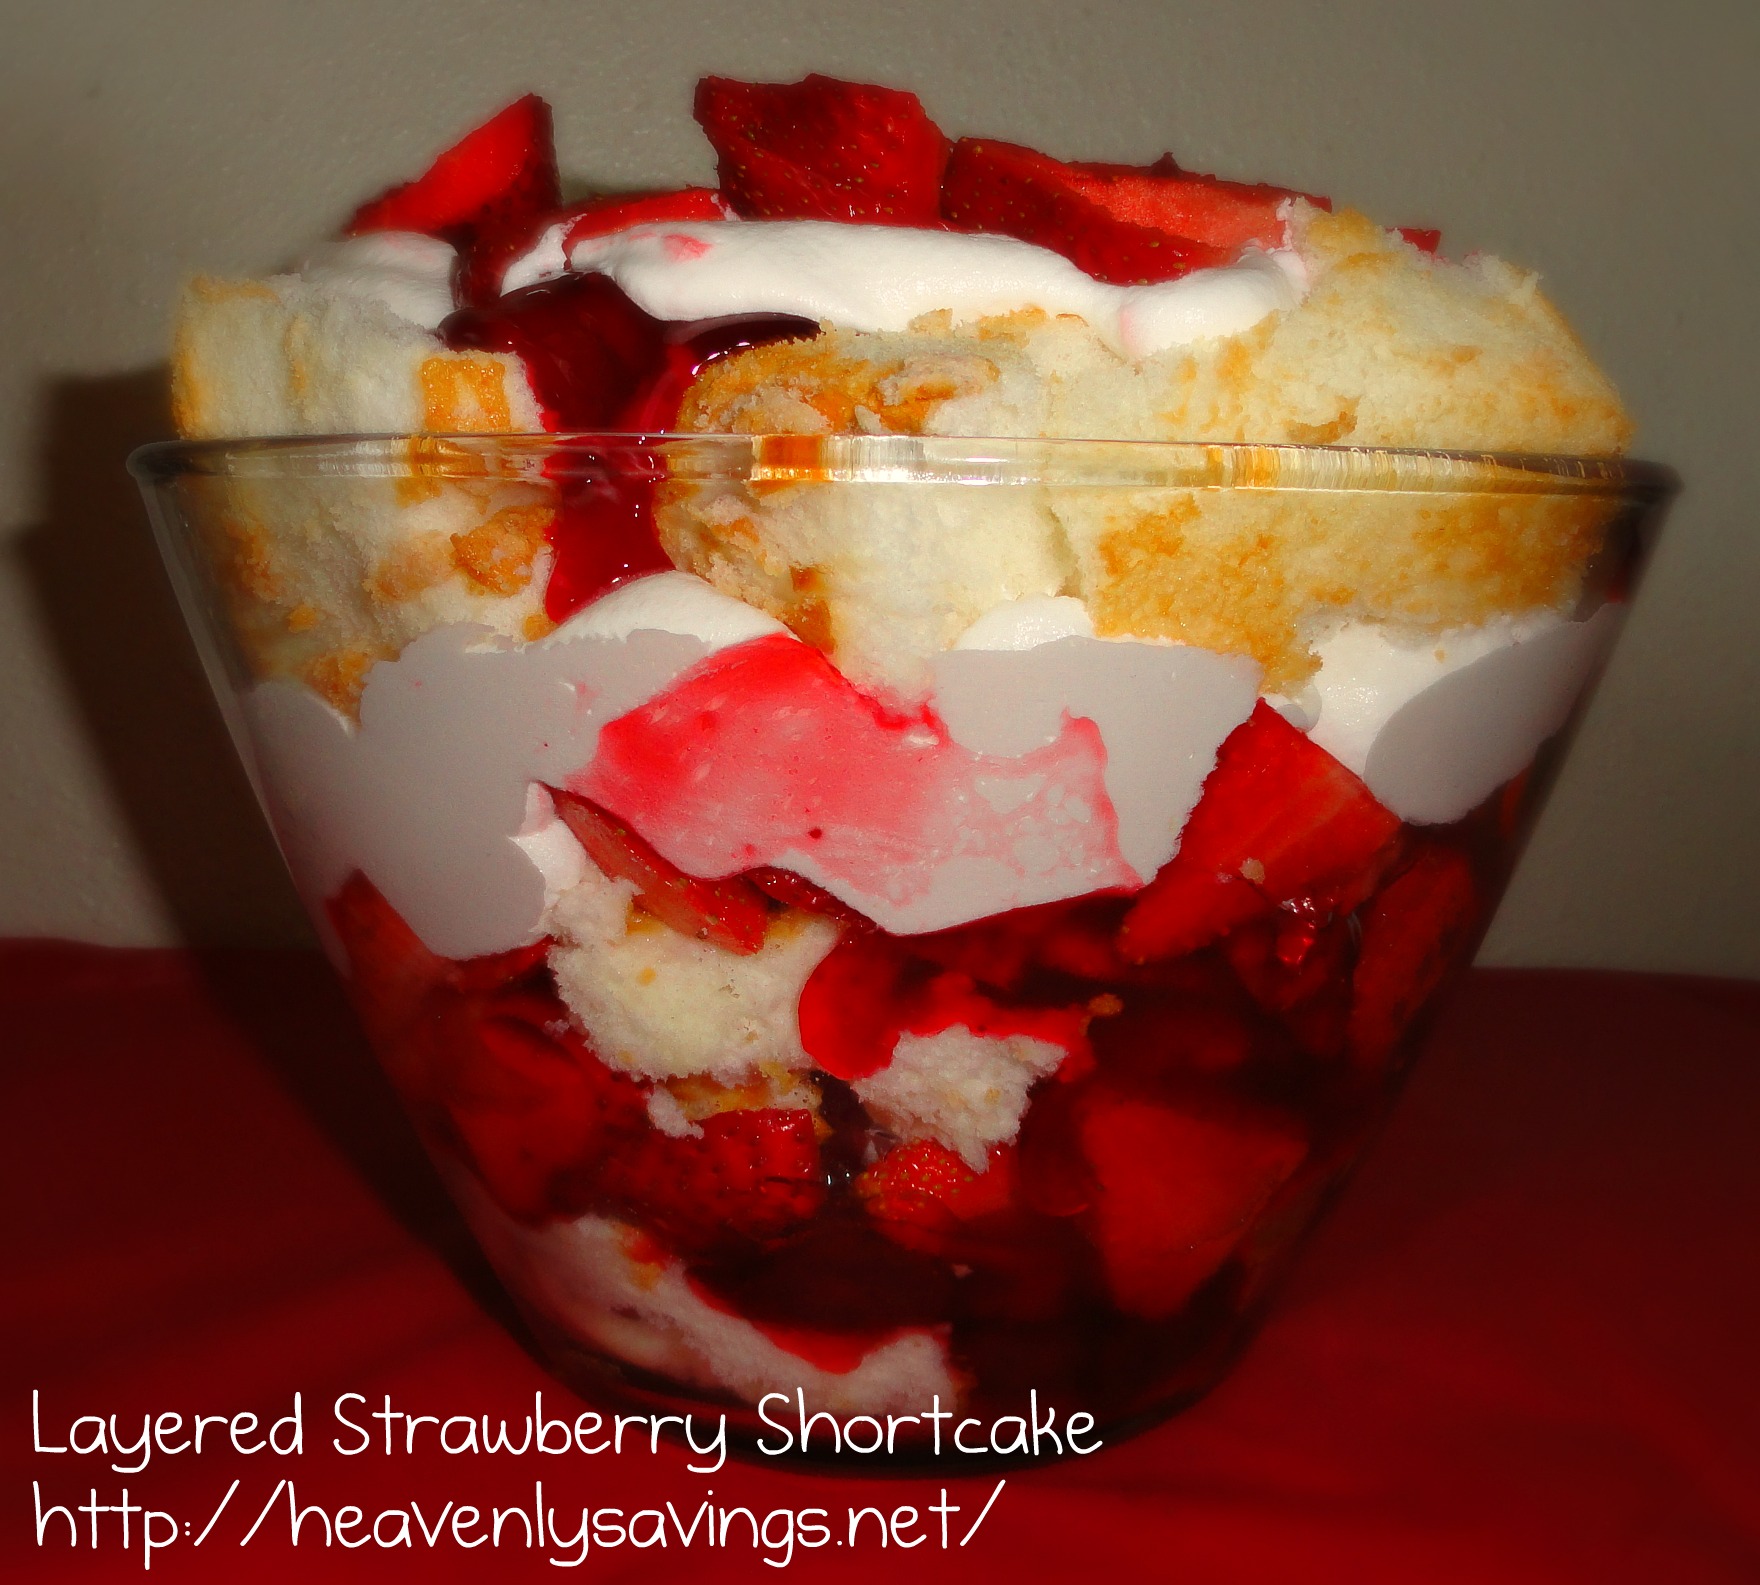 Layered Strawberry Shortcake!